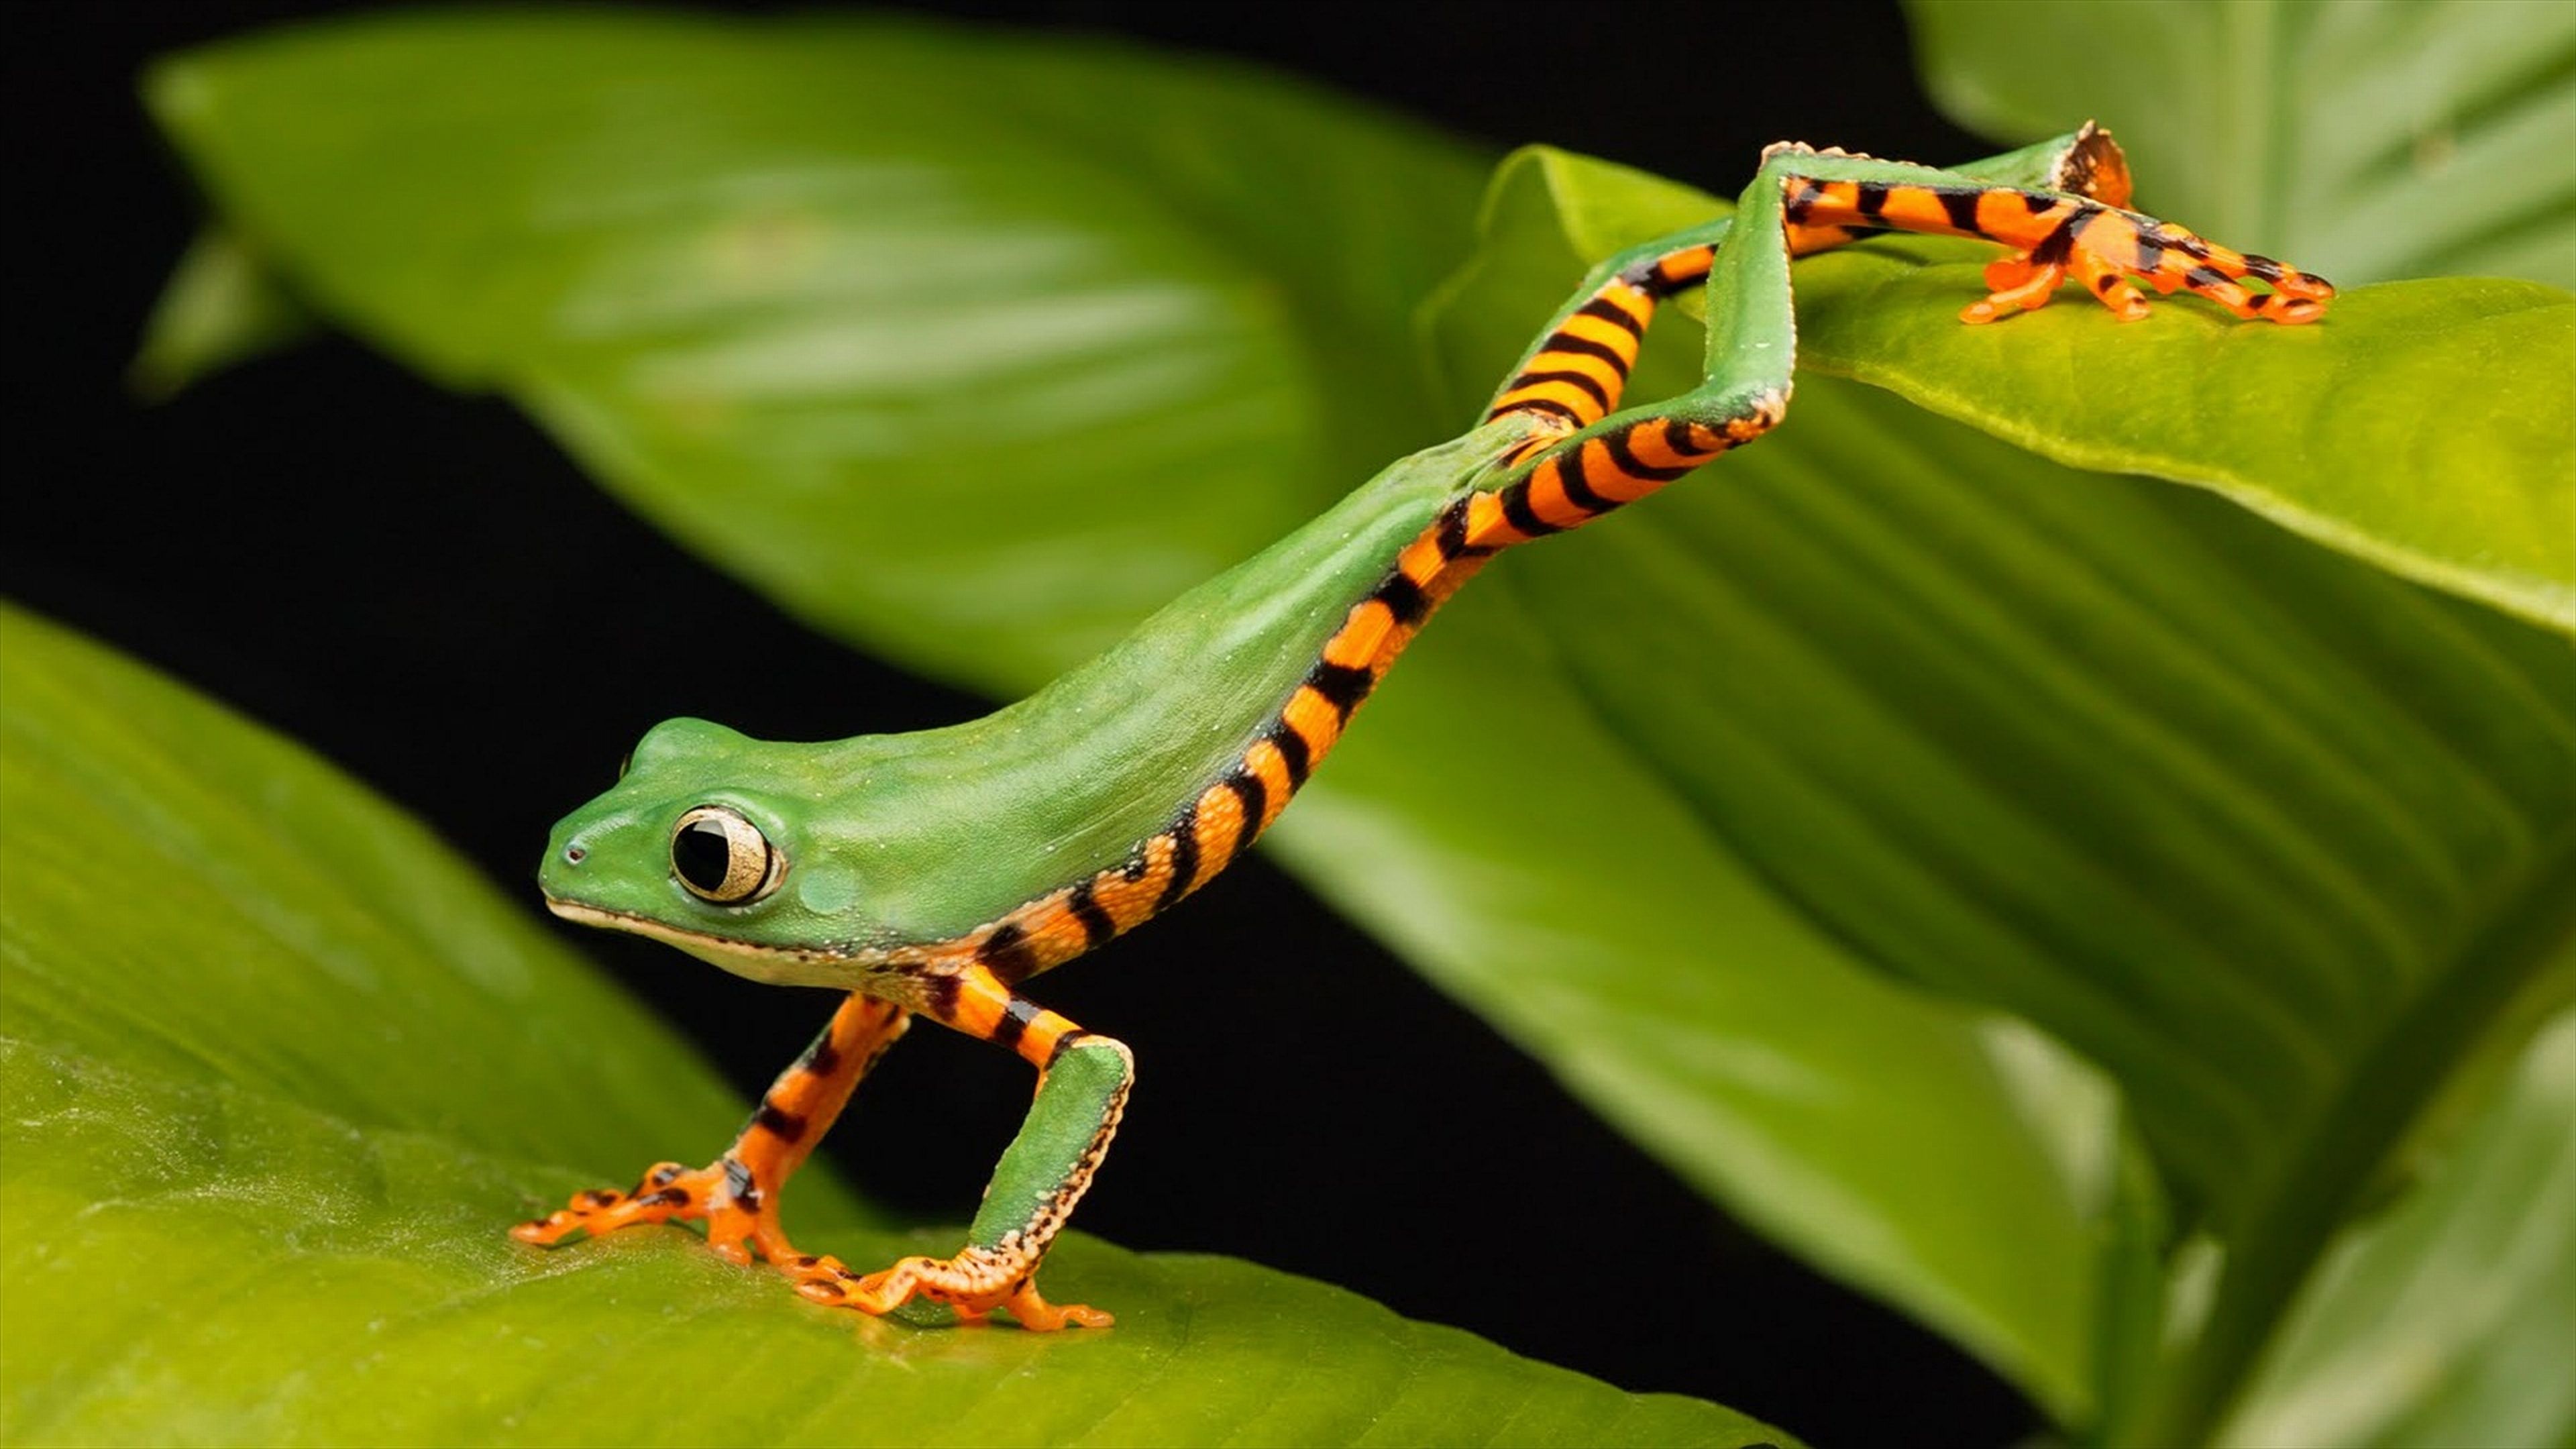 A tree frog sitting on a leaf. - Frog